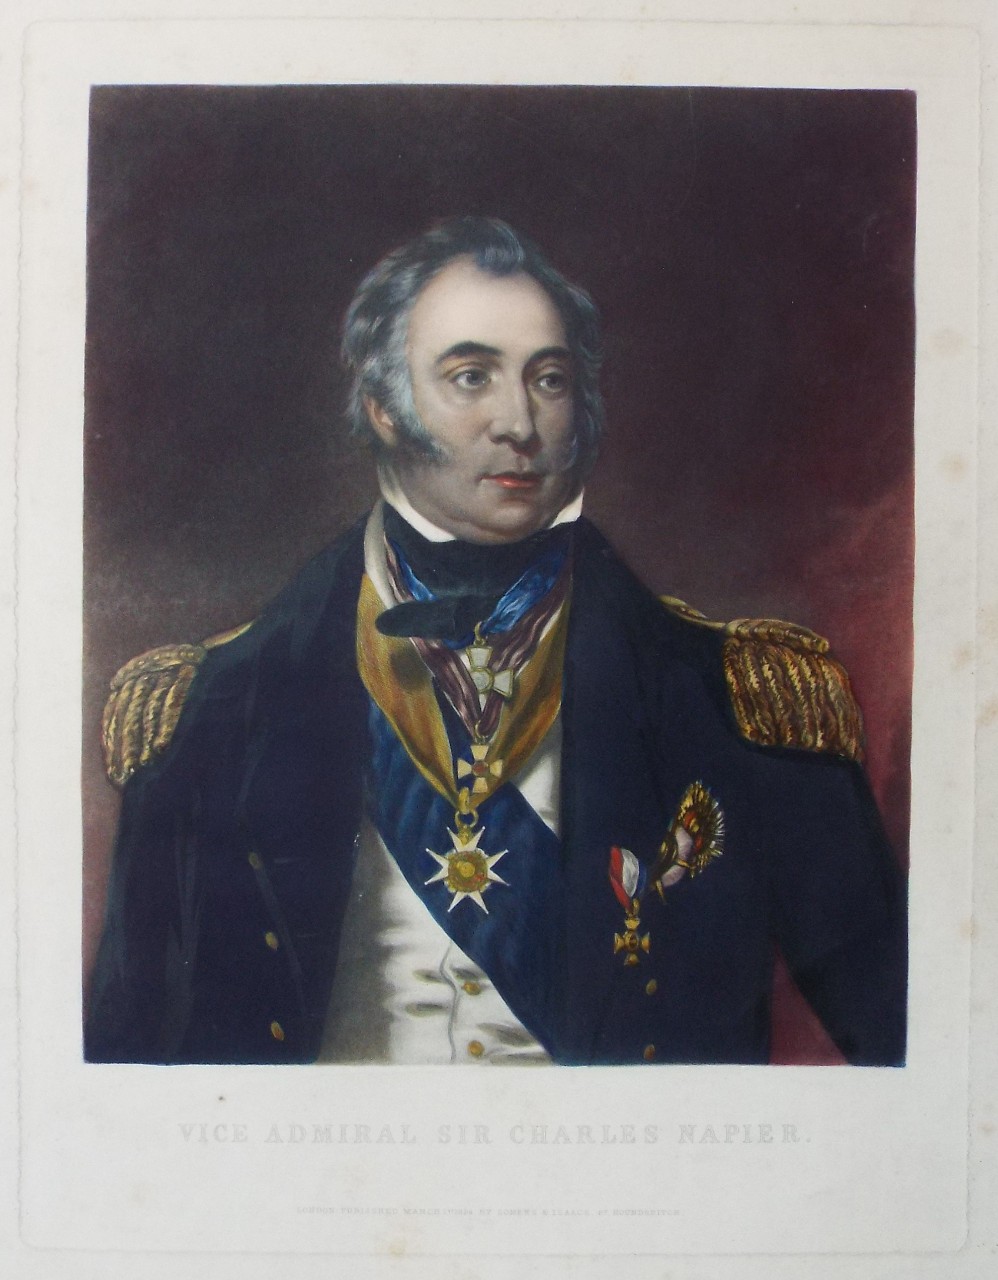 Mezzotint - Vice Admiral Sir Charles Napier - Porter